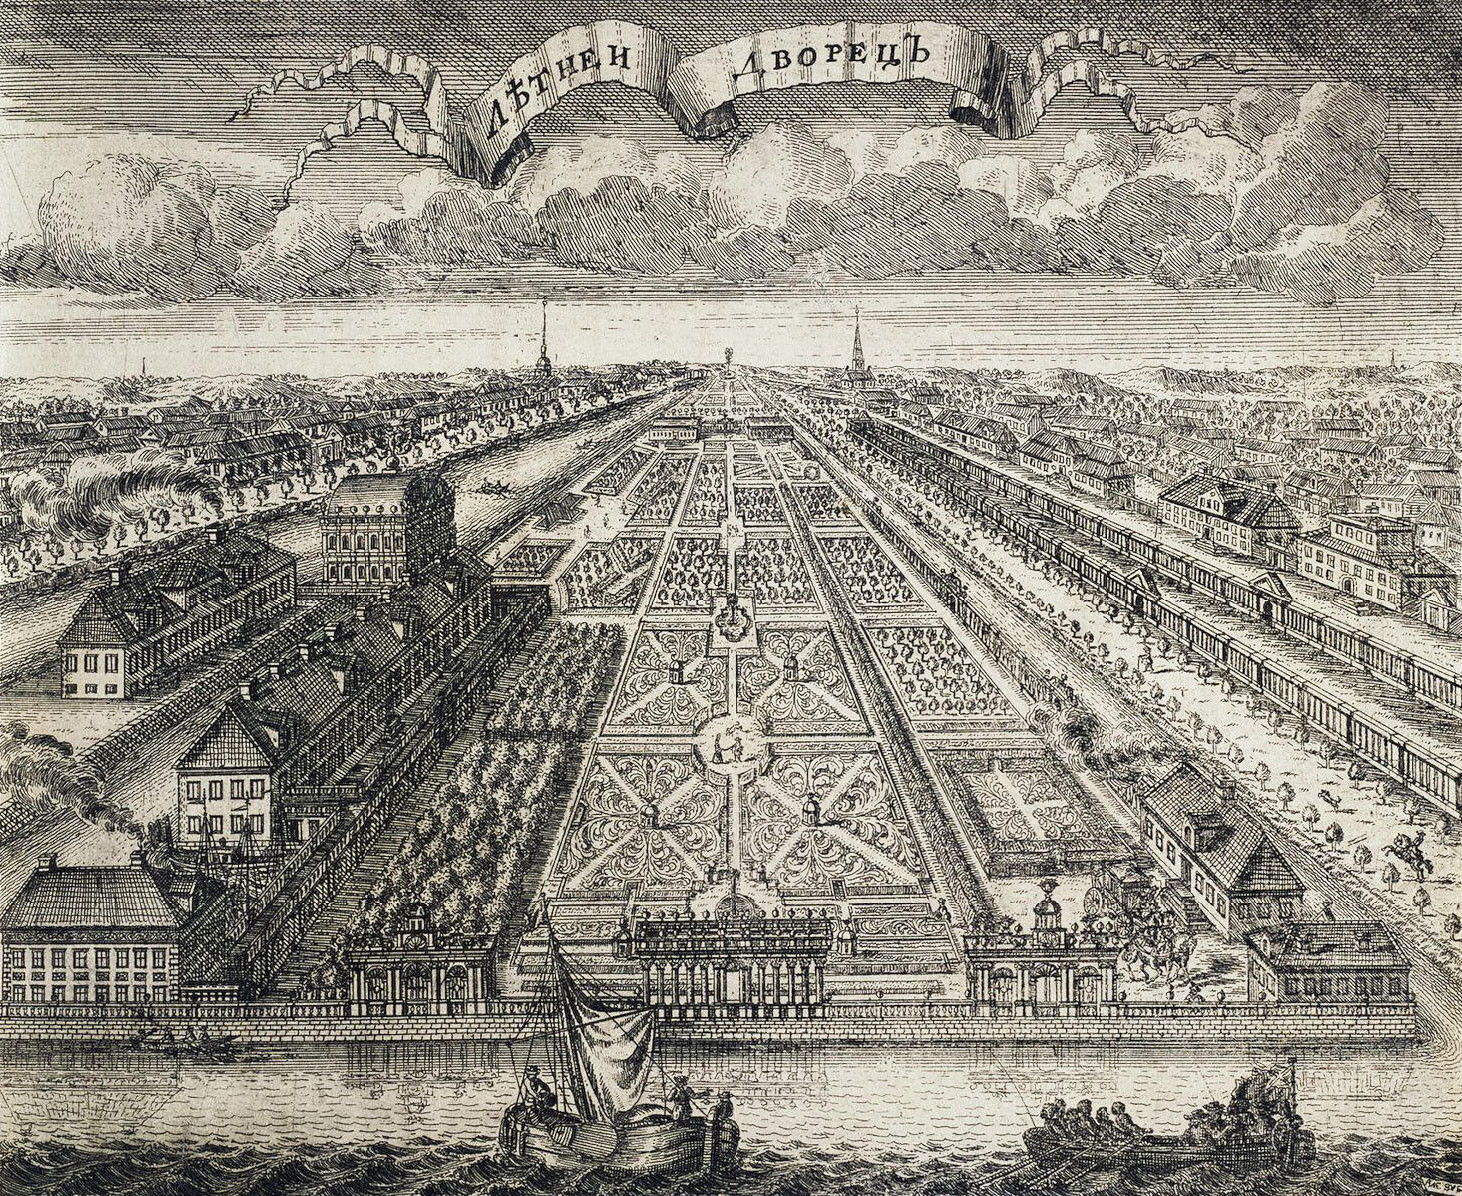 Summer House and Summer Garden in St. Petersburg, 1716.